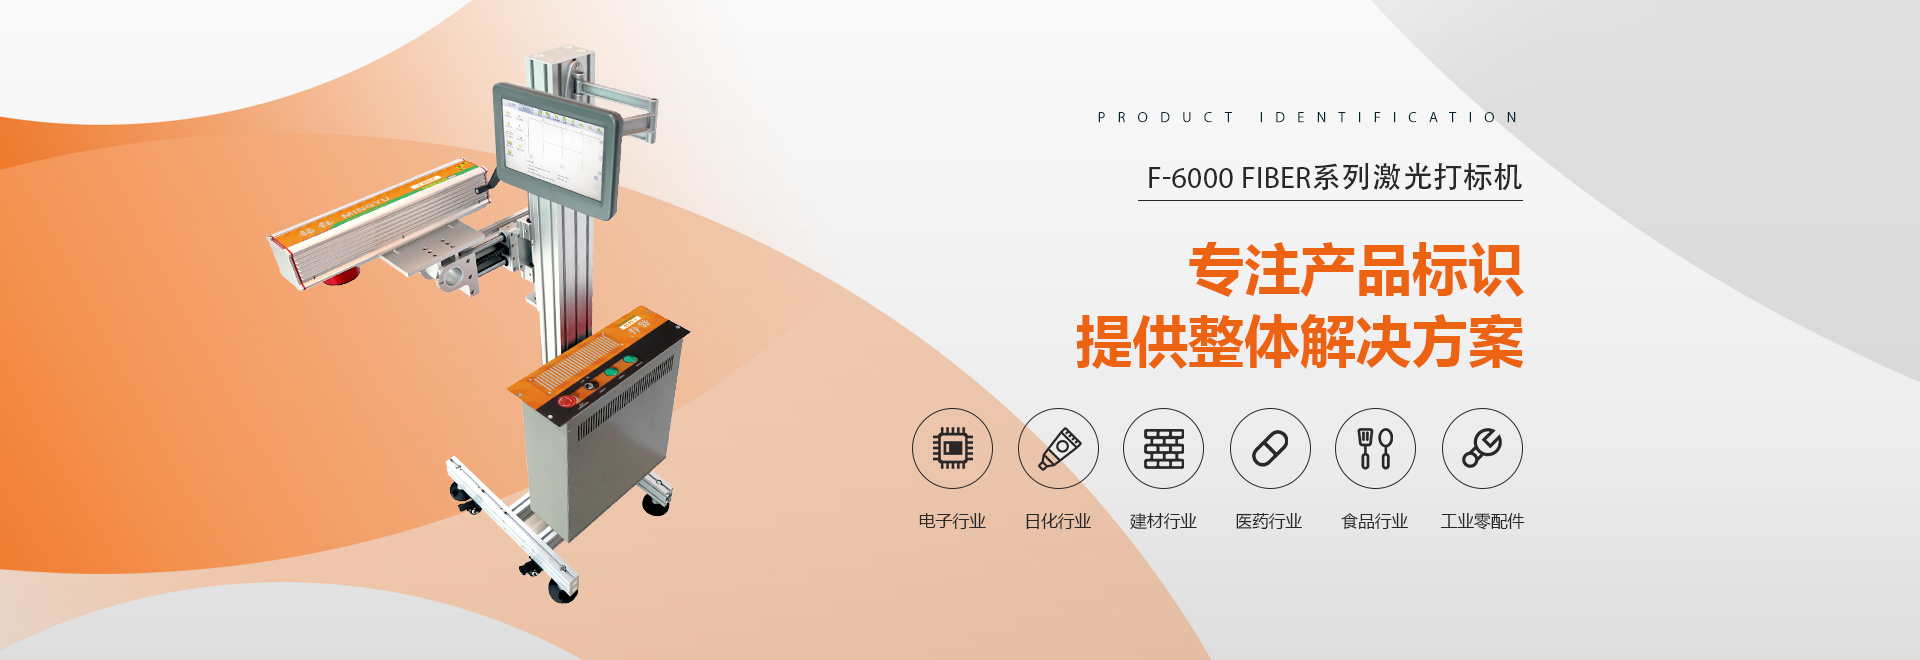 F-6000 FIBER系列激光打标机